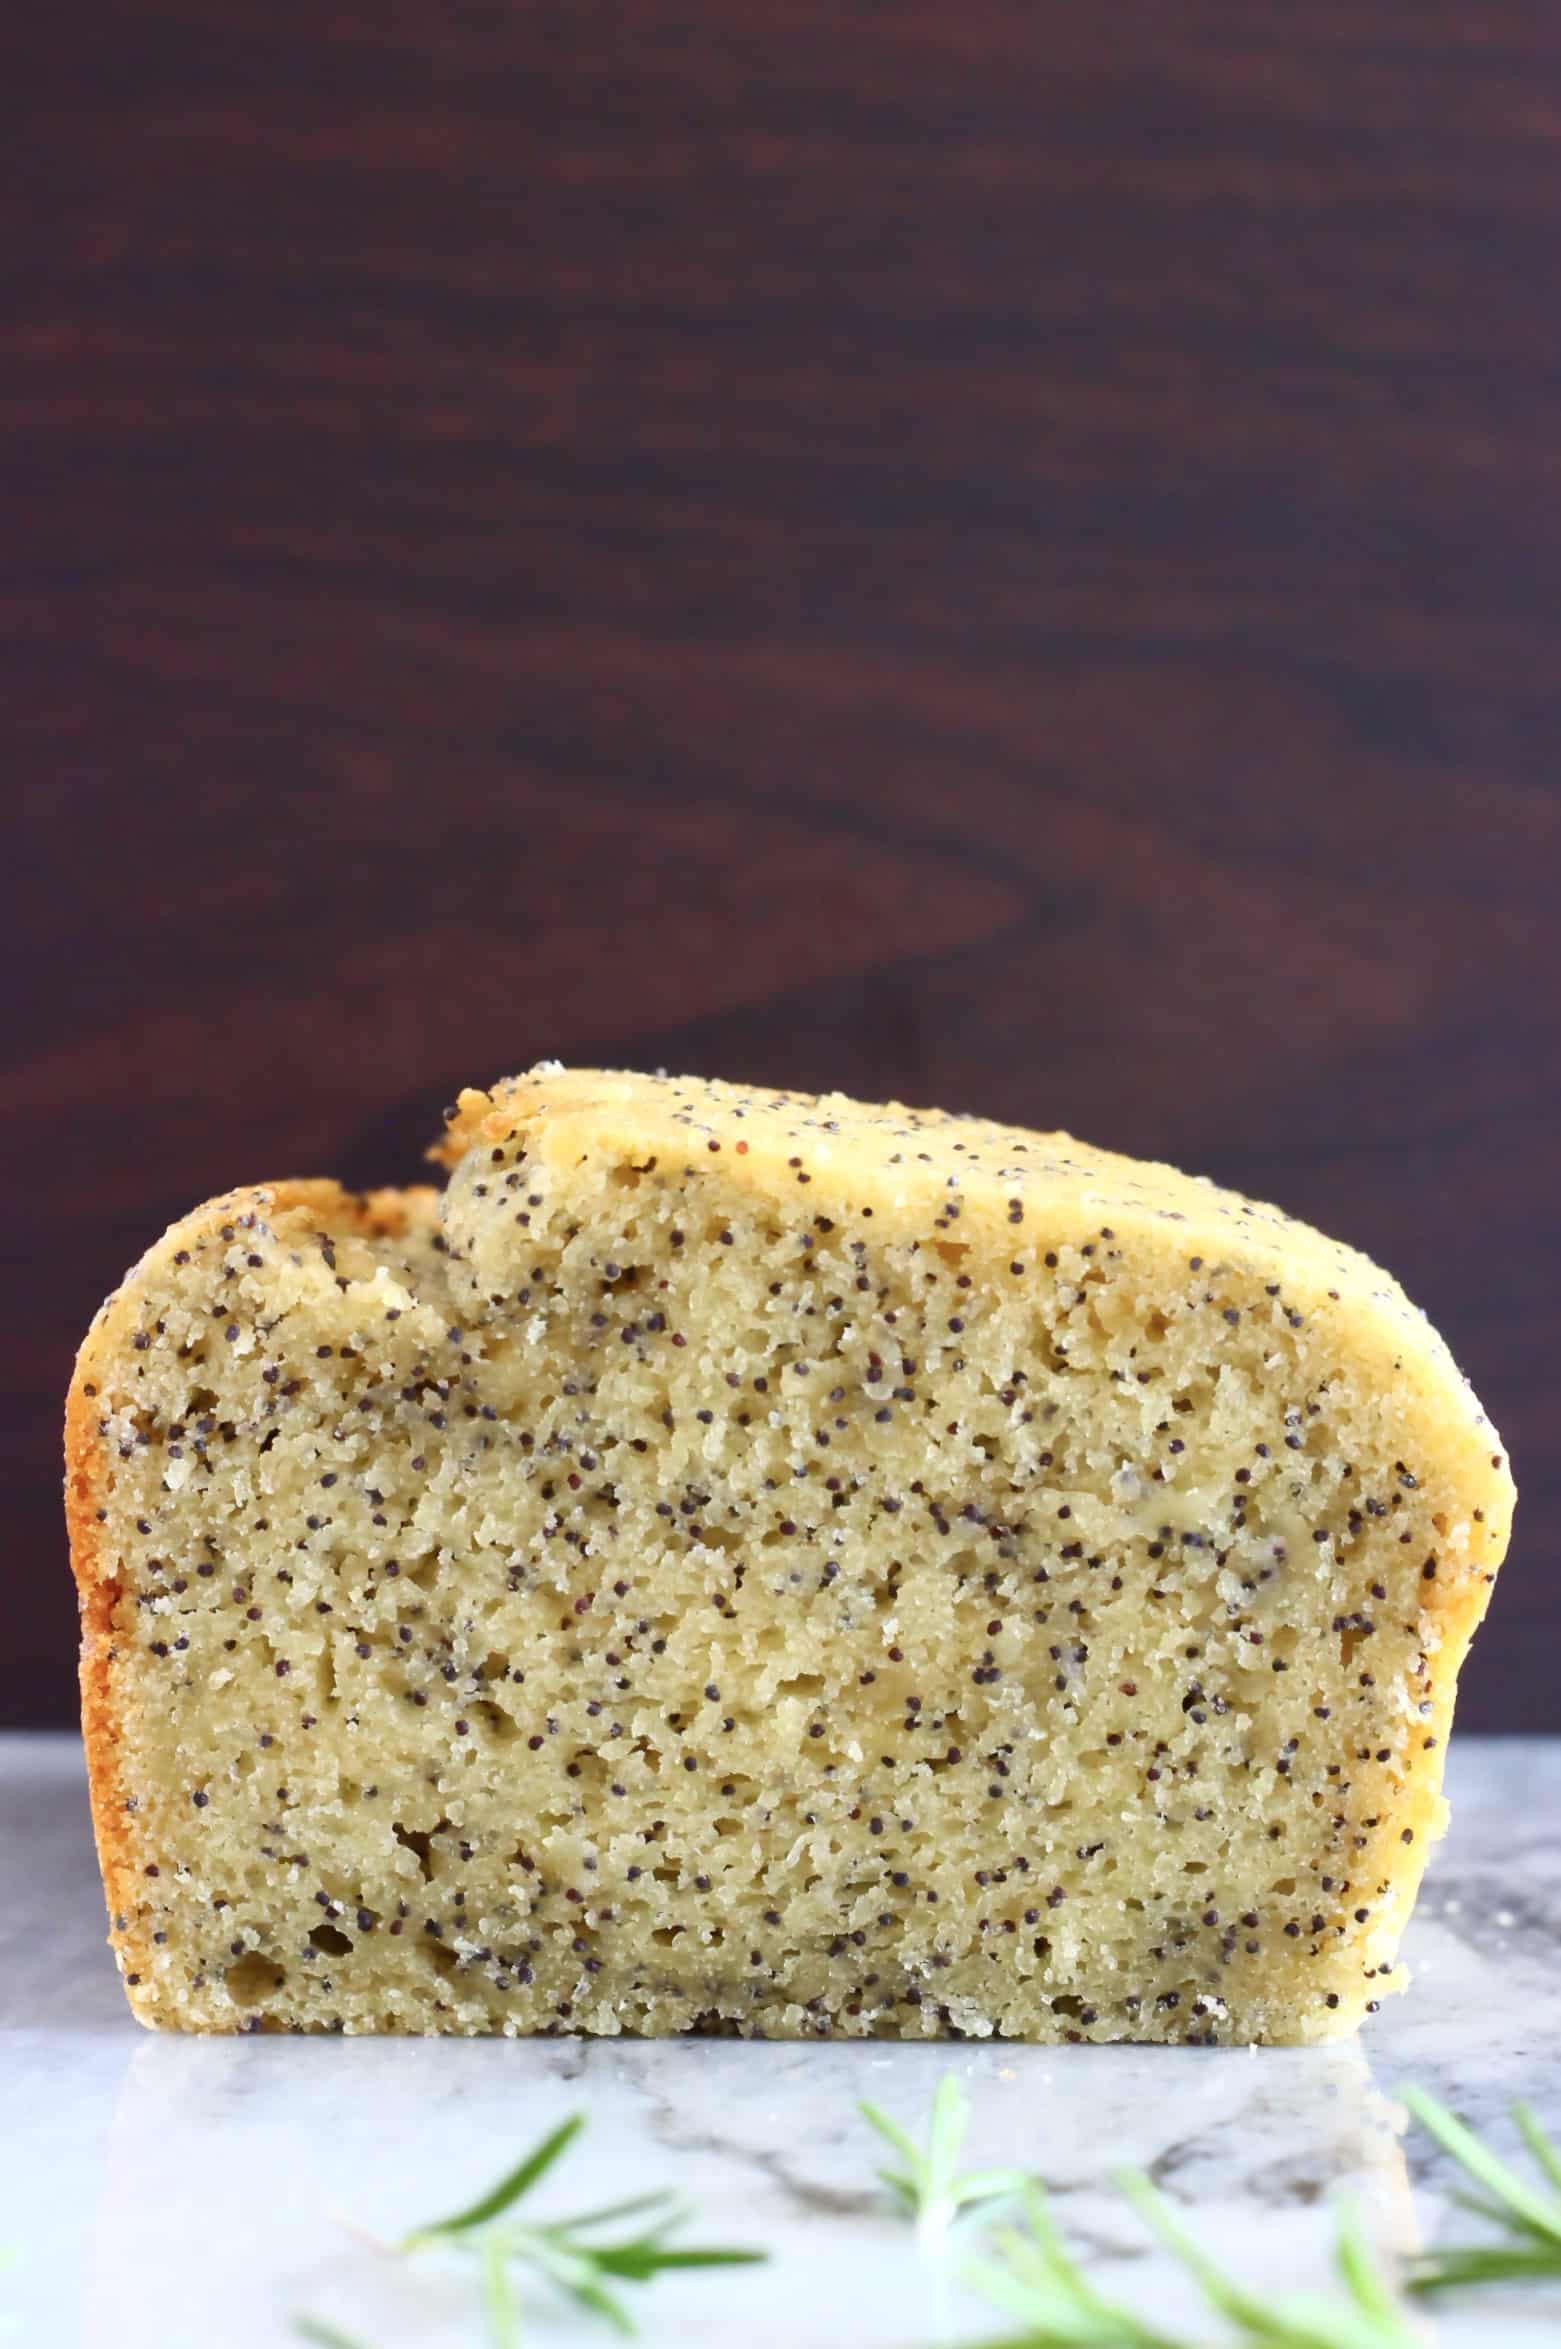 A cross-section of a sliced loaf of gluten-free vegan orange poppy seed bread